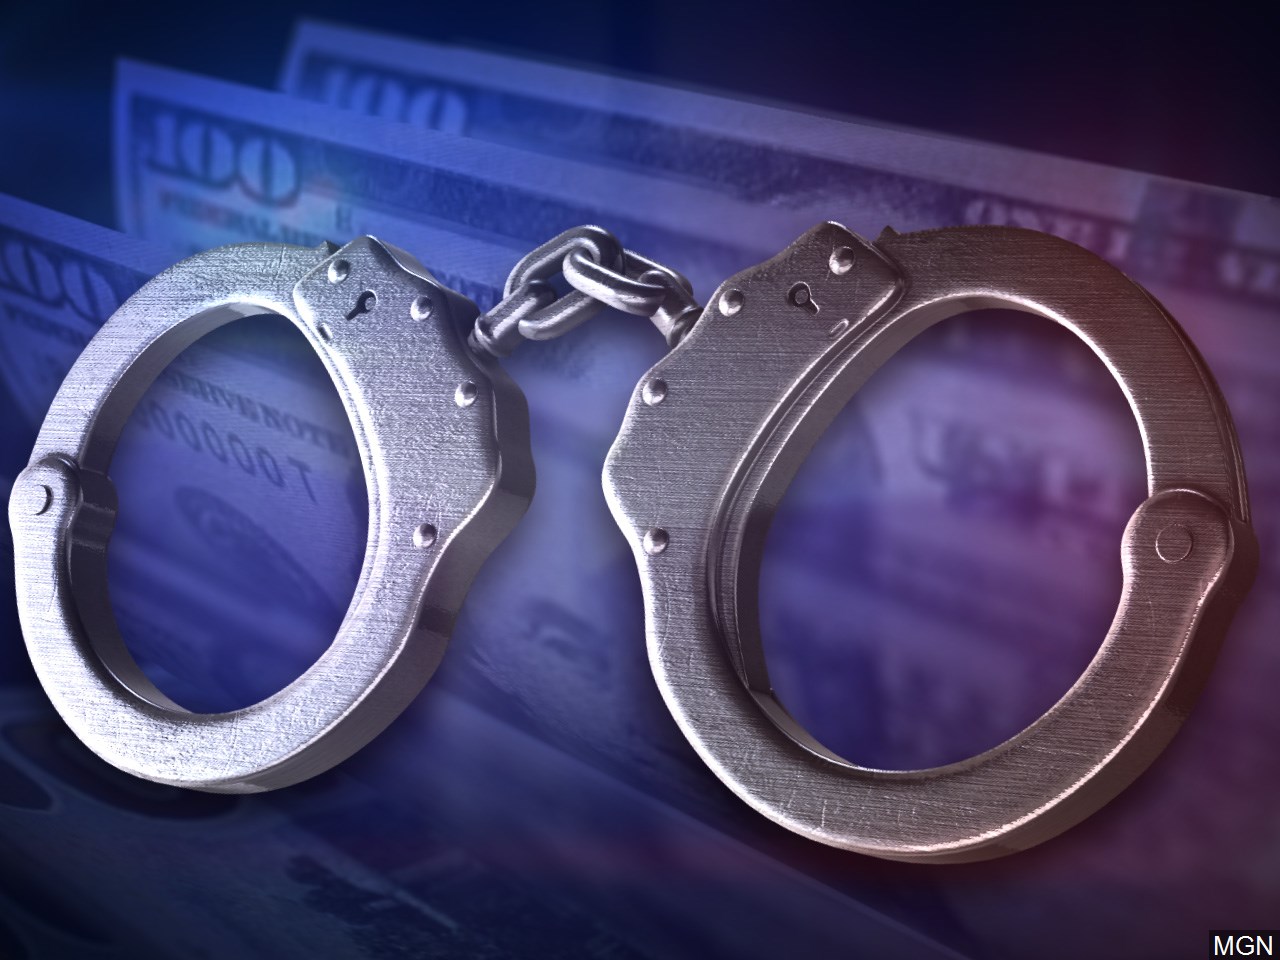 2 arrested with stolen car, fake $100 bills in Trussville